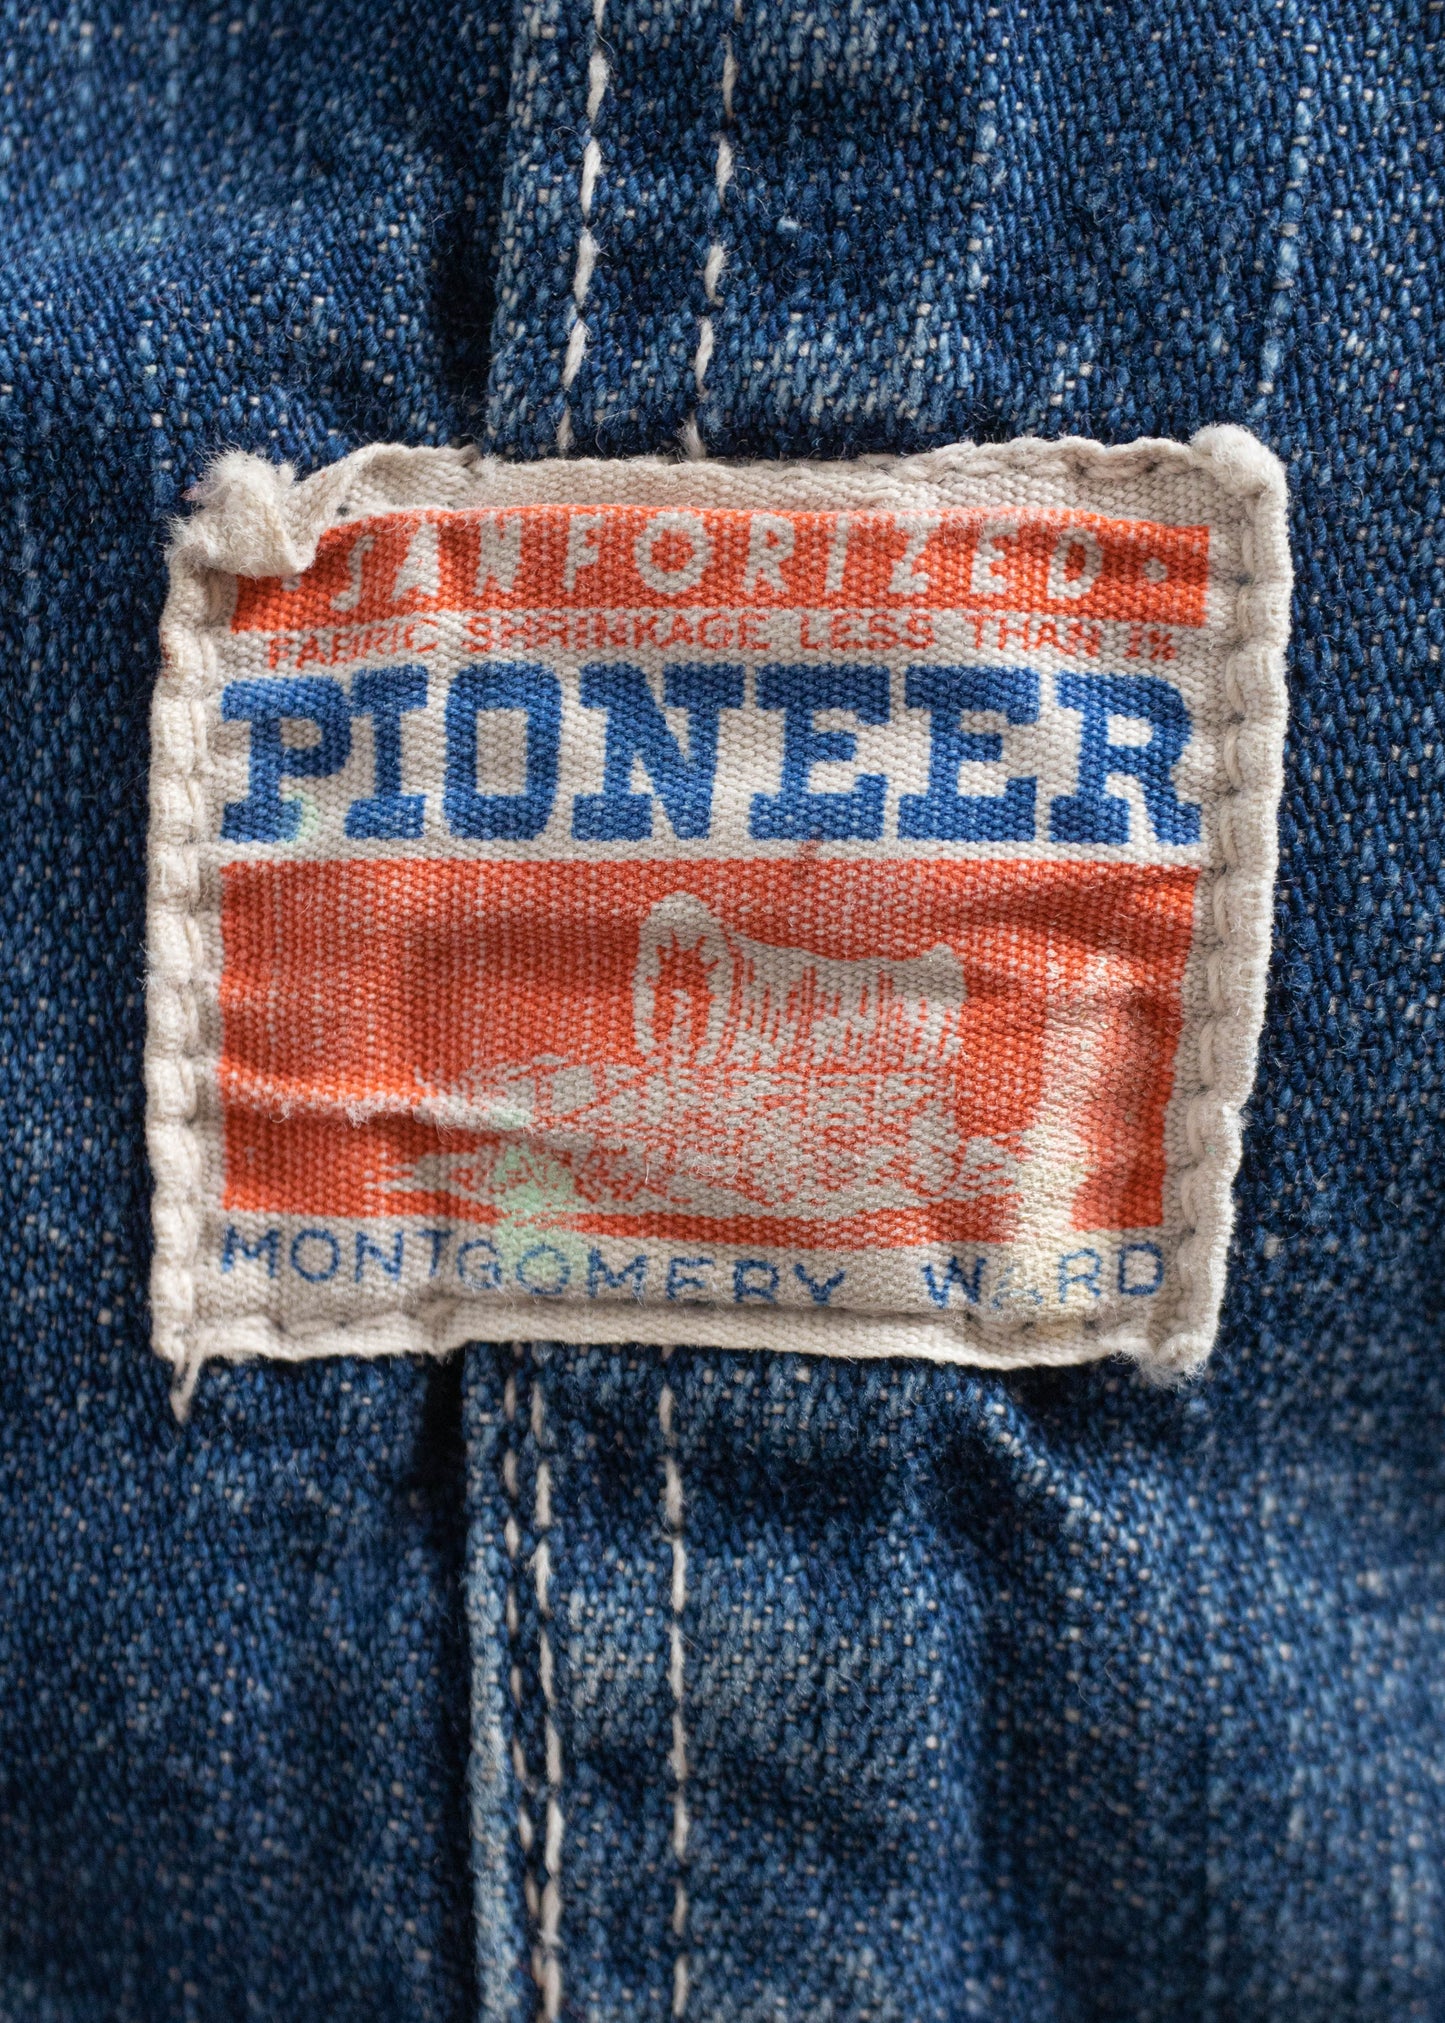 Vintage 1950s Pioneer Montgomery Ward Denim Overalls Size L/XL